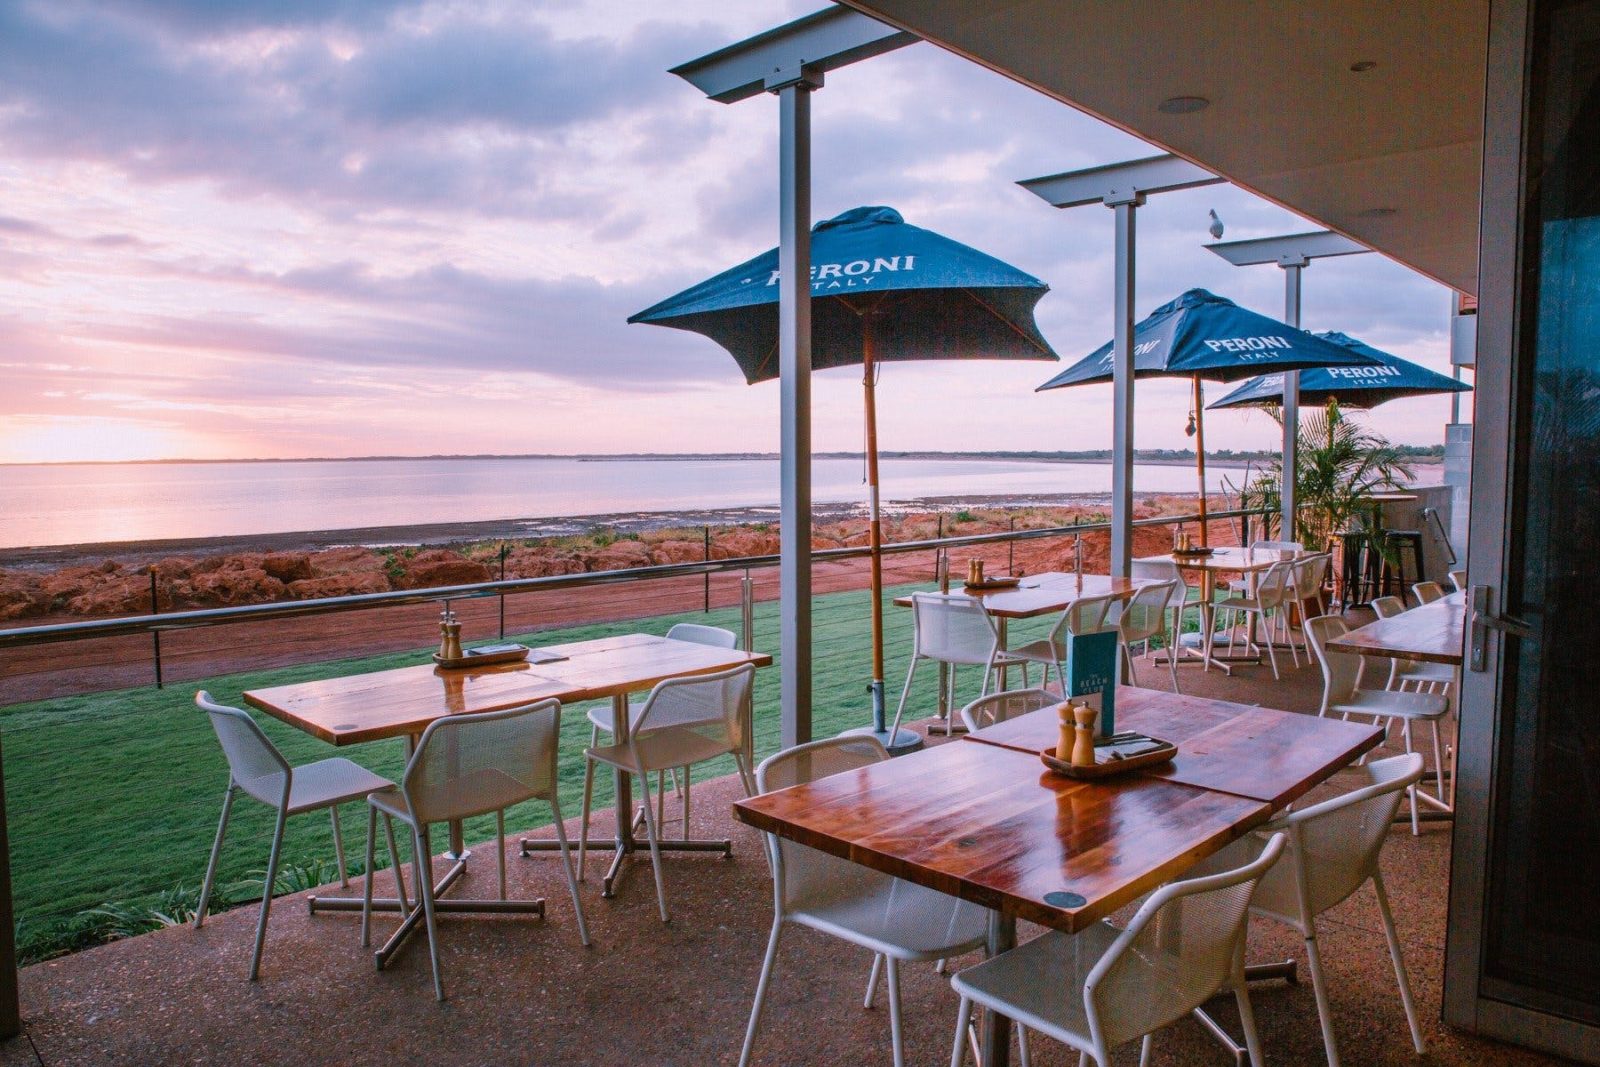 Onslow Beach Resort - The Beach Club Restaurant & Bar